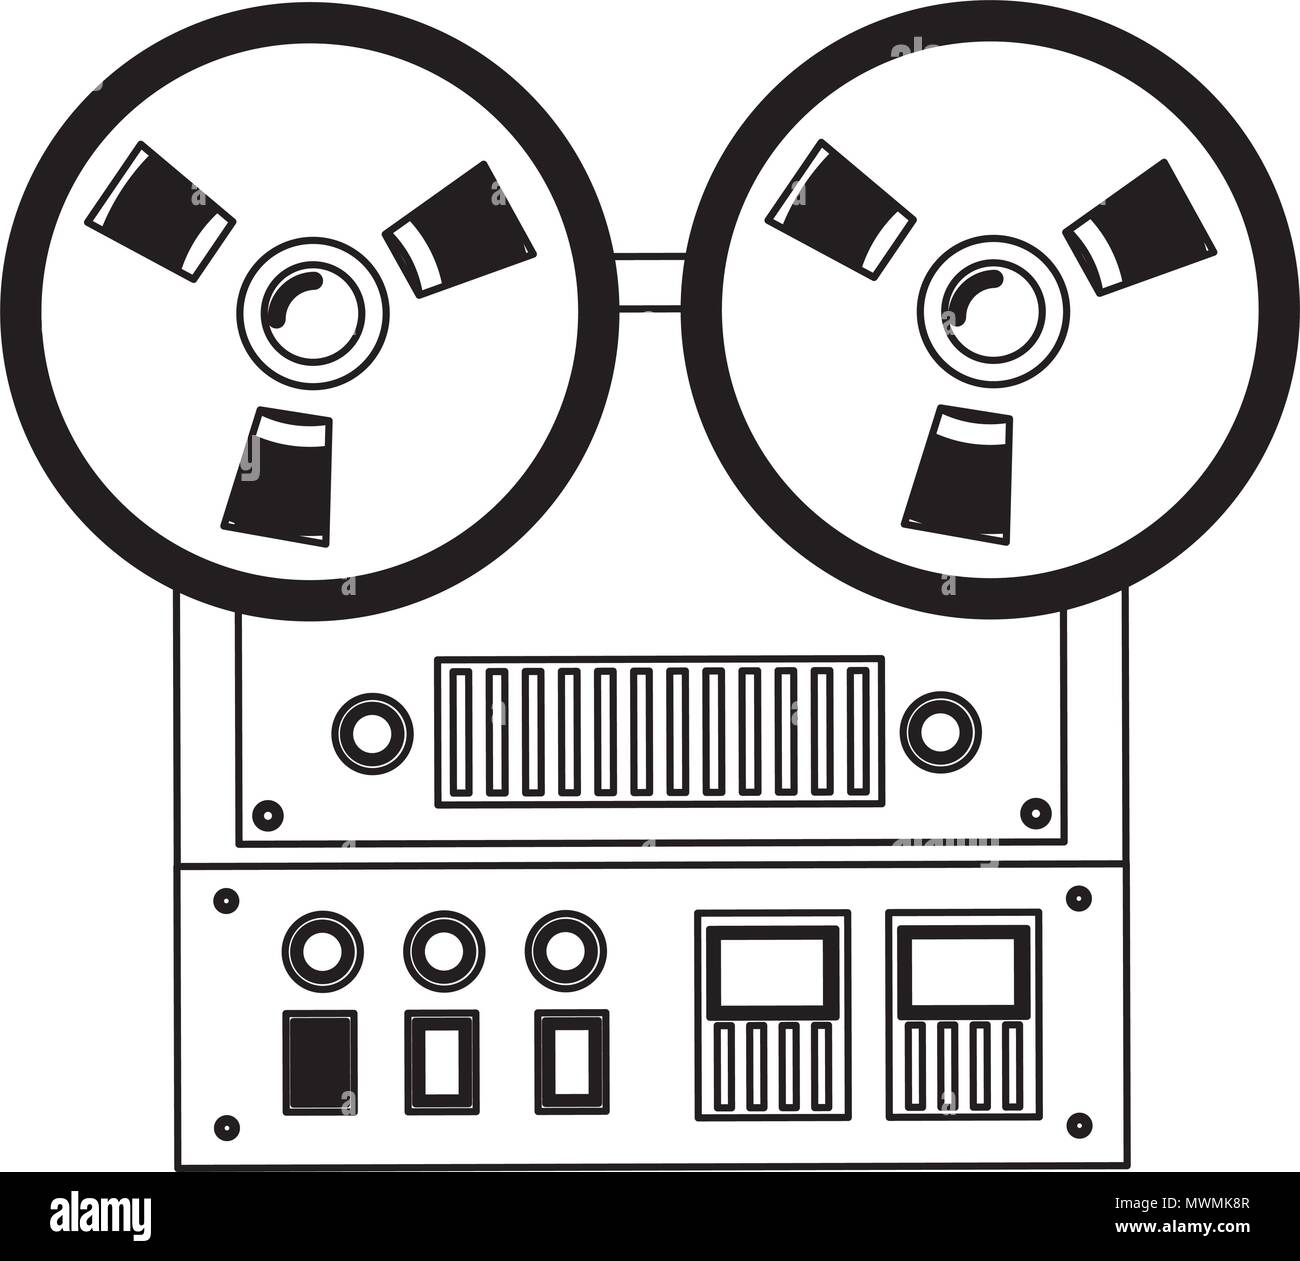 reel to reel tape recorder audio retro device vector illustration